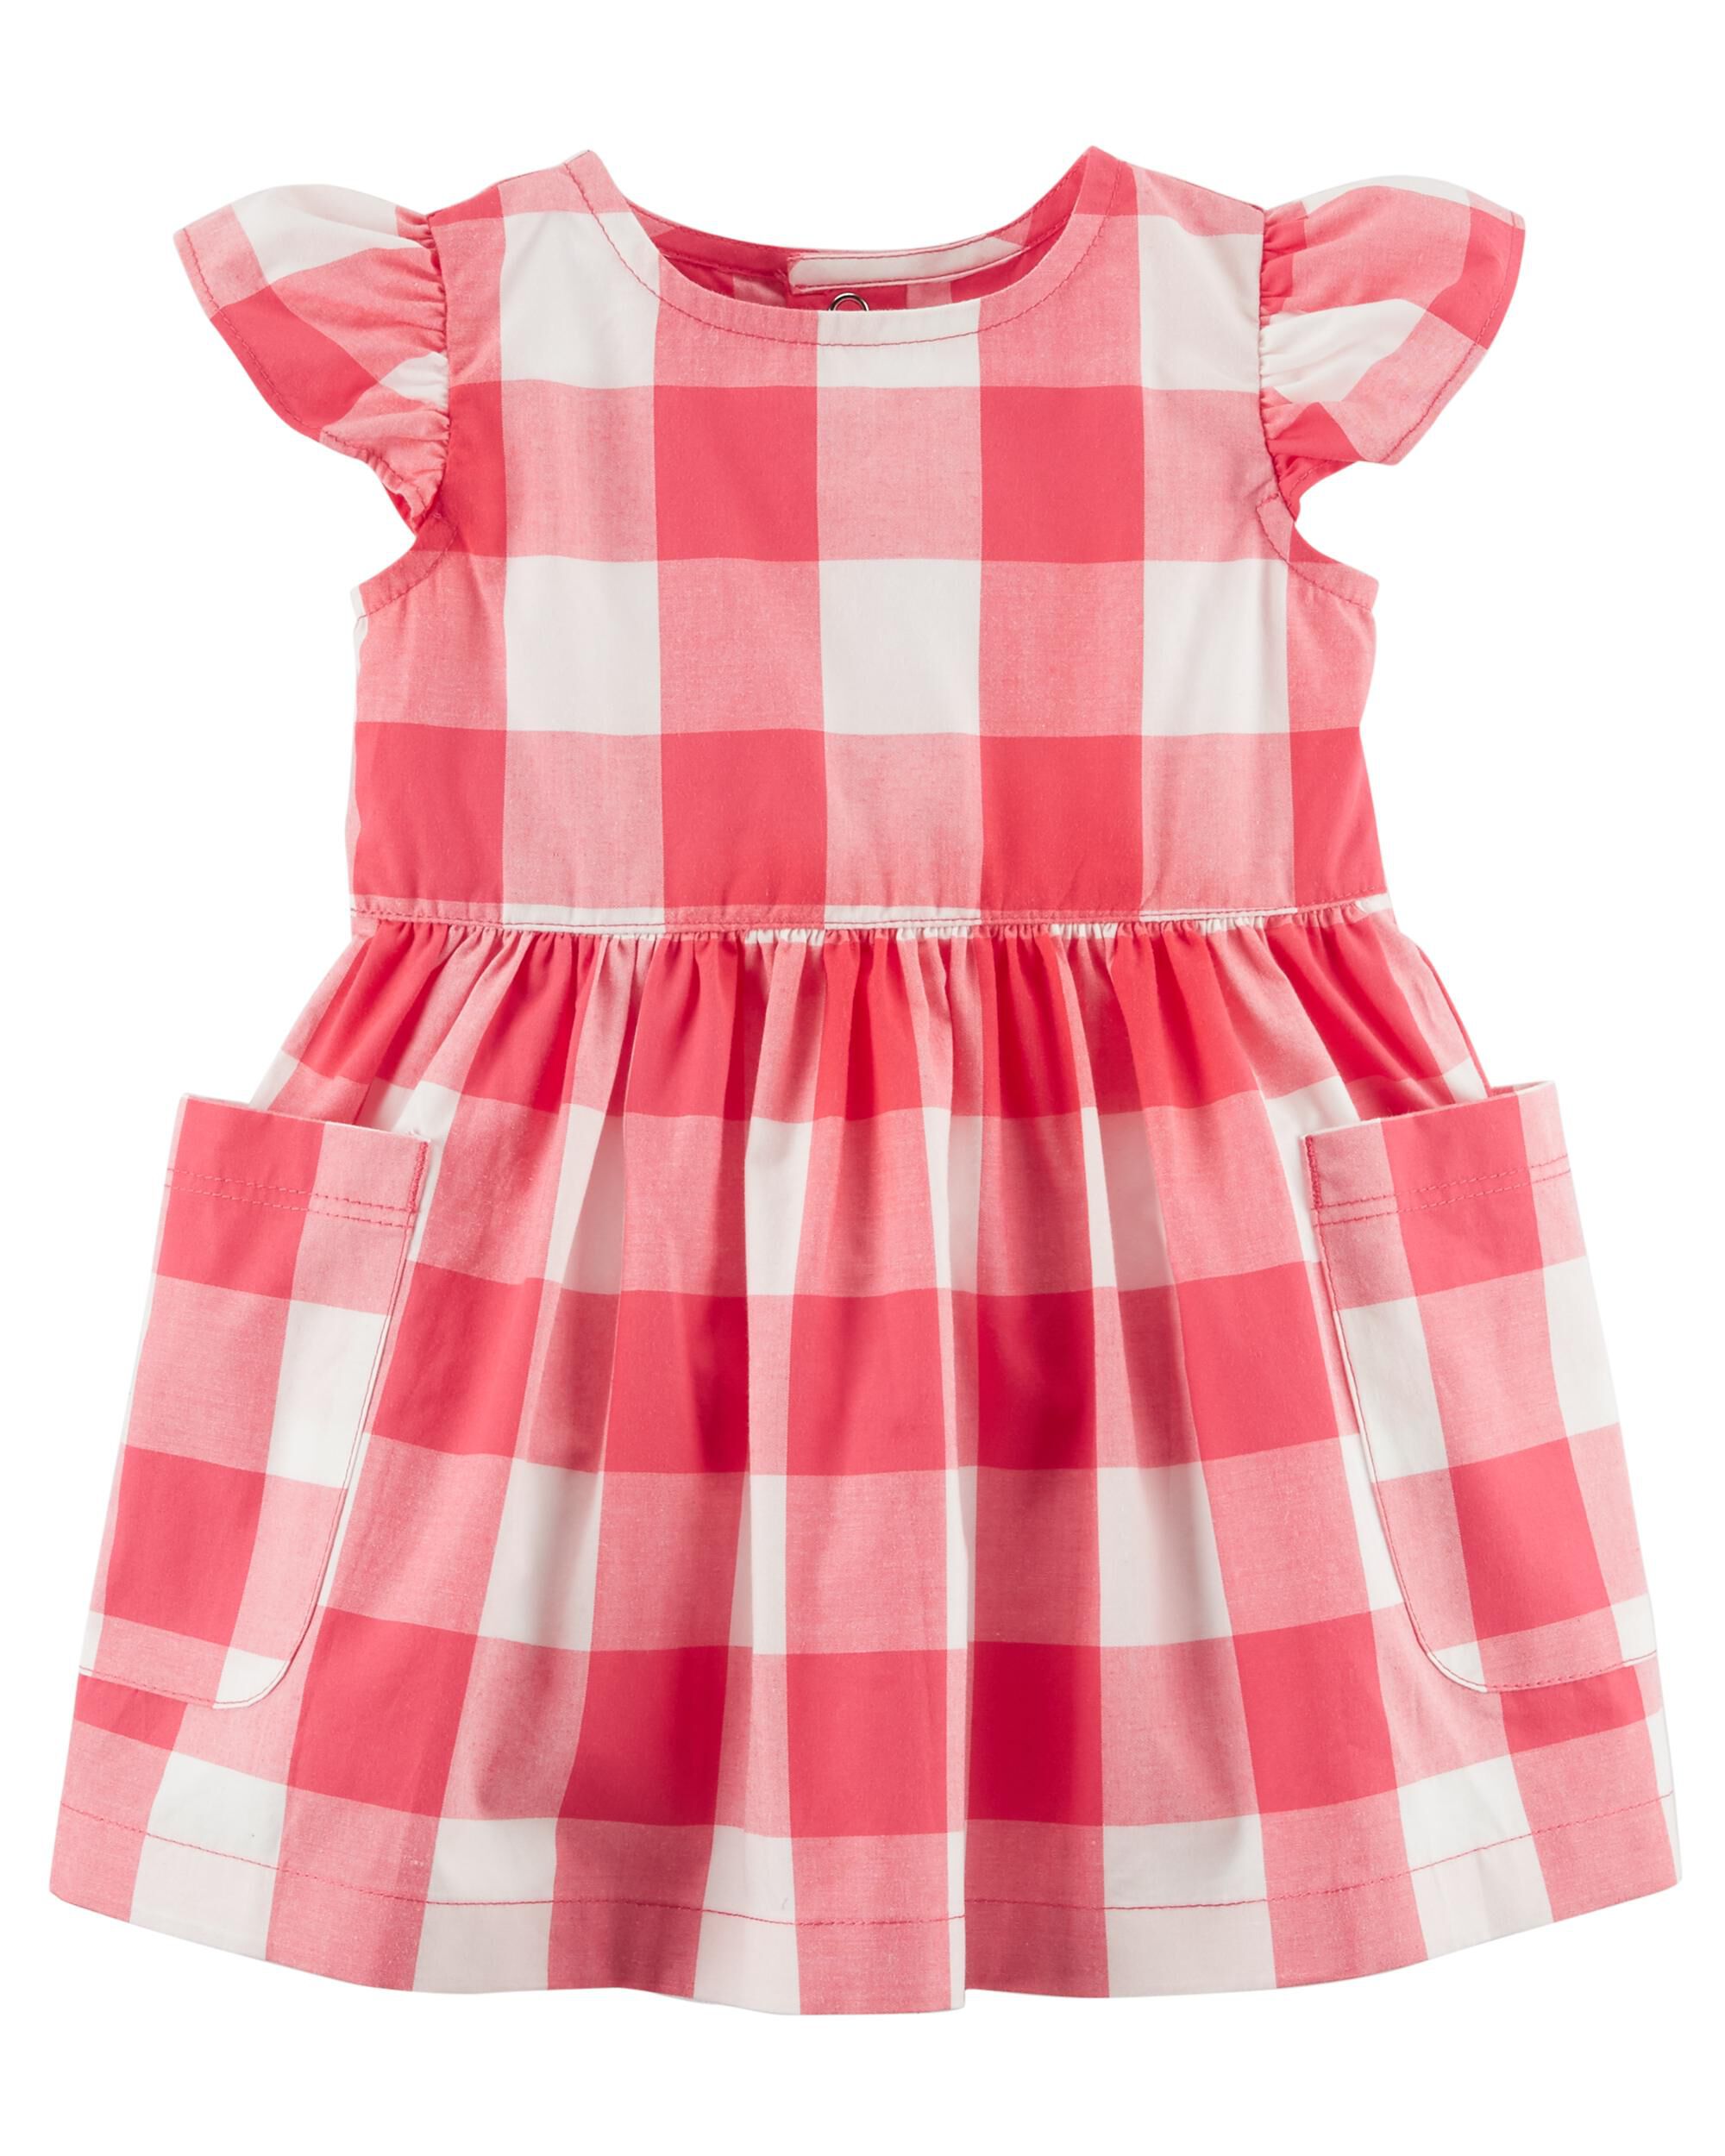 baby pink gingham dress